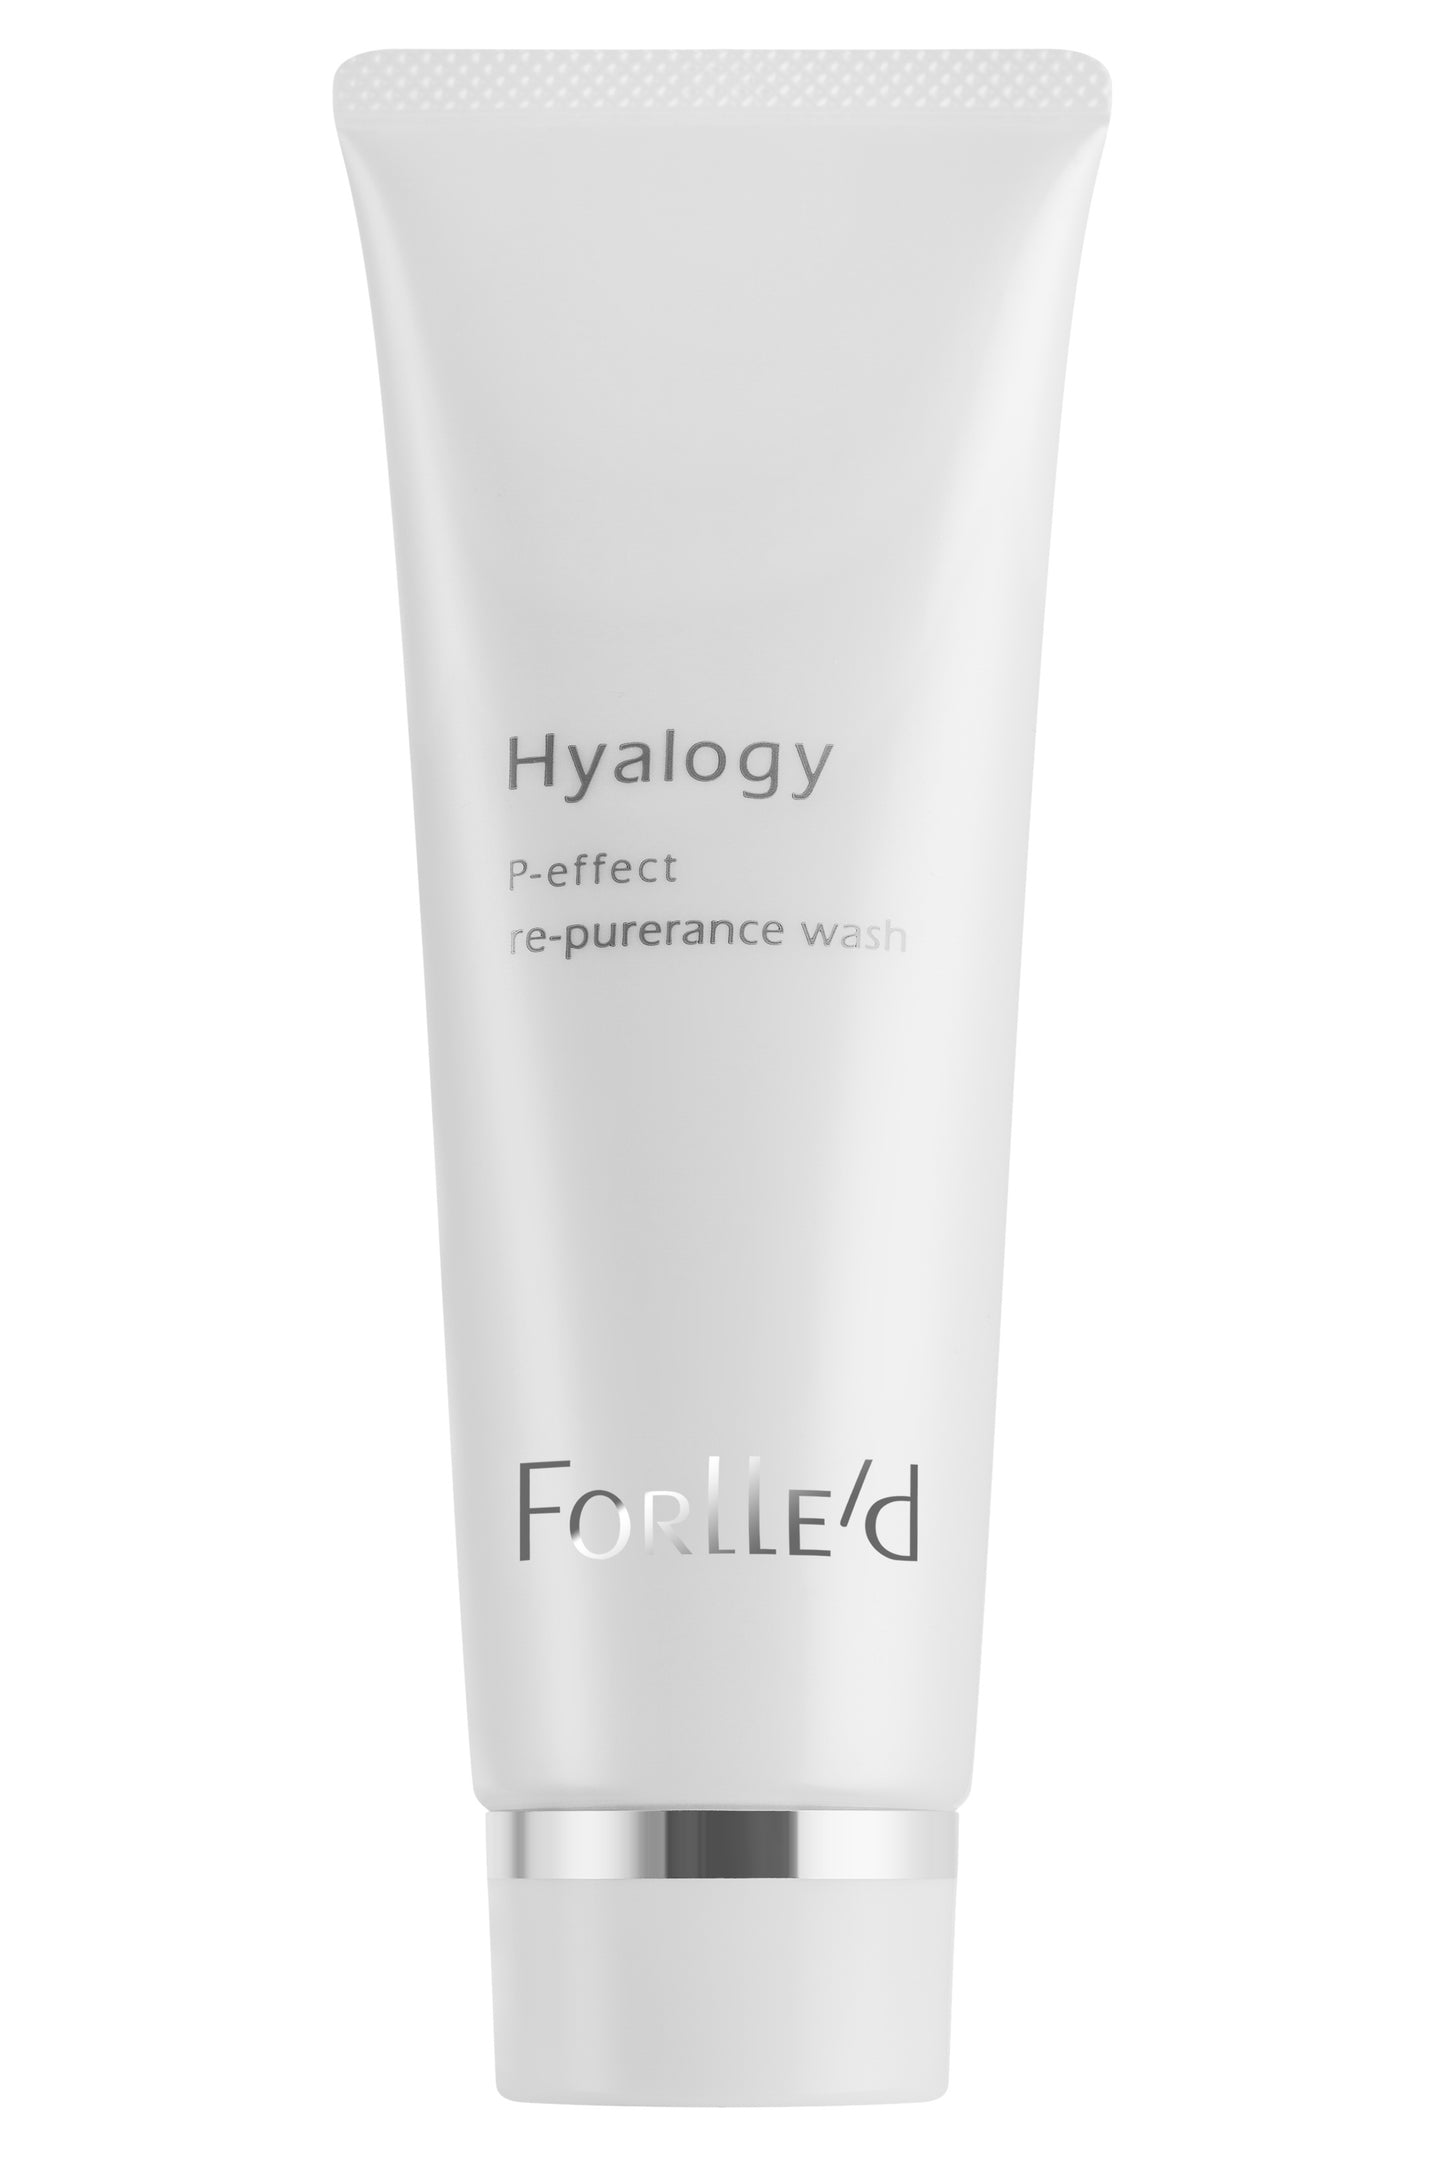 Forlle'd Hyalogy P-effect Re-purerance Wash 100 ml